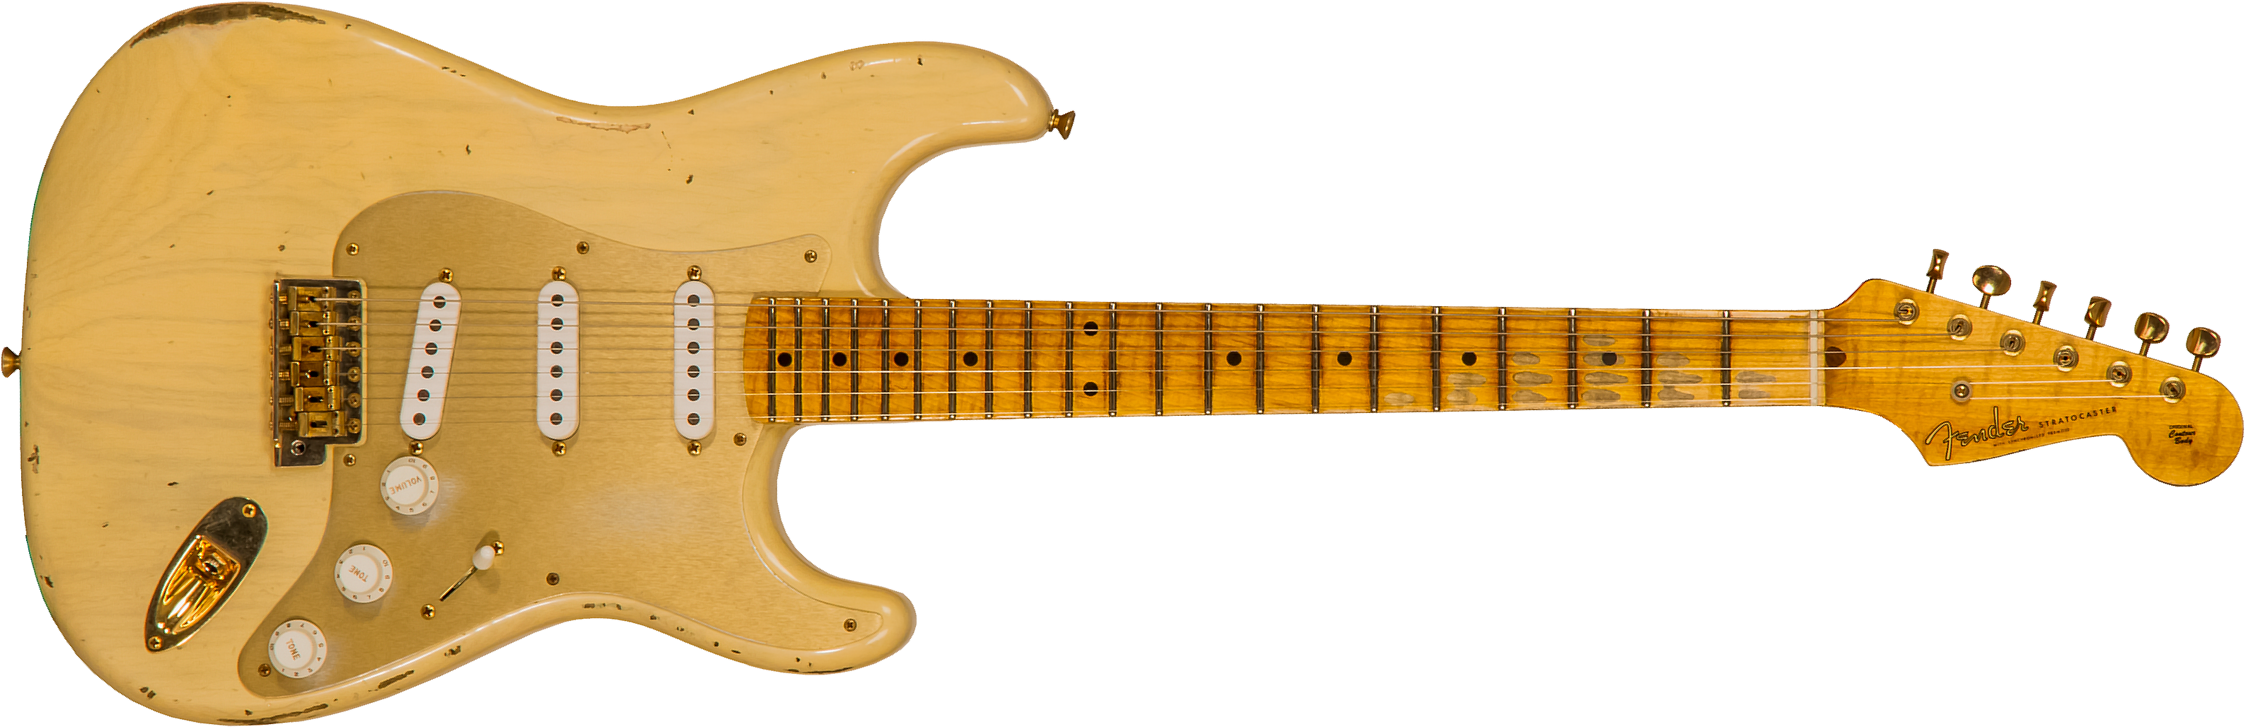 Fender Custom Shop Strat 1955 Bone Tone Usa 3s Trem Mn #cz554628 - Relic Honey Blonde W/ Gold Hardware - Str shape electric guitar - Main picture